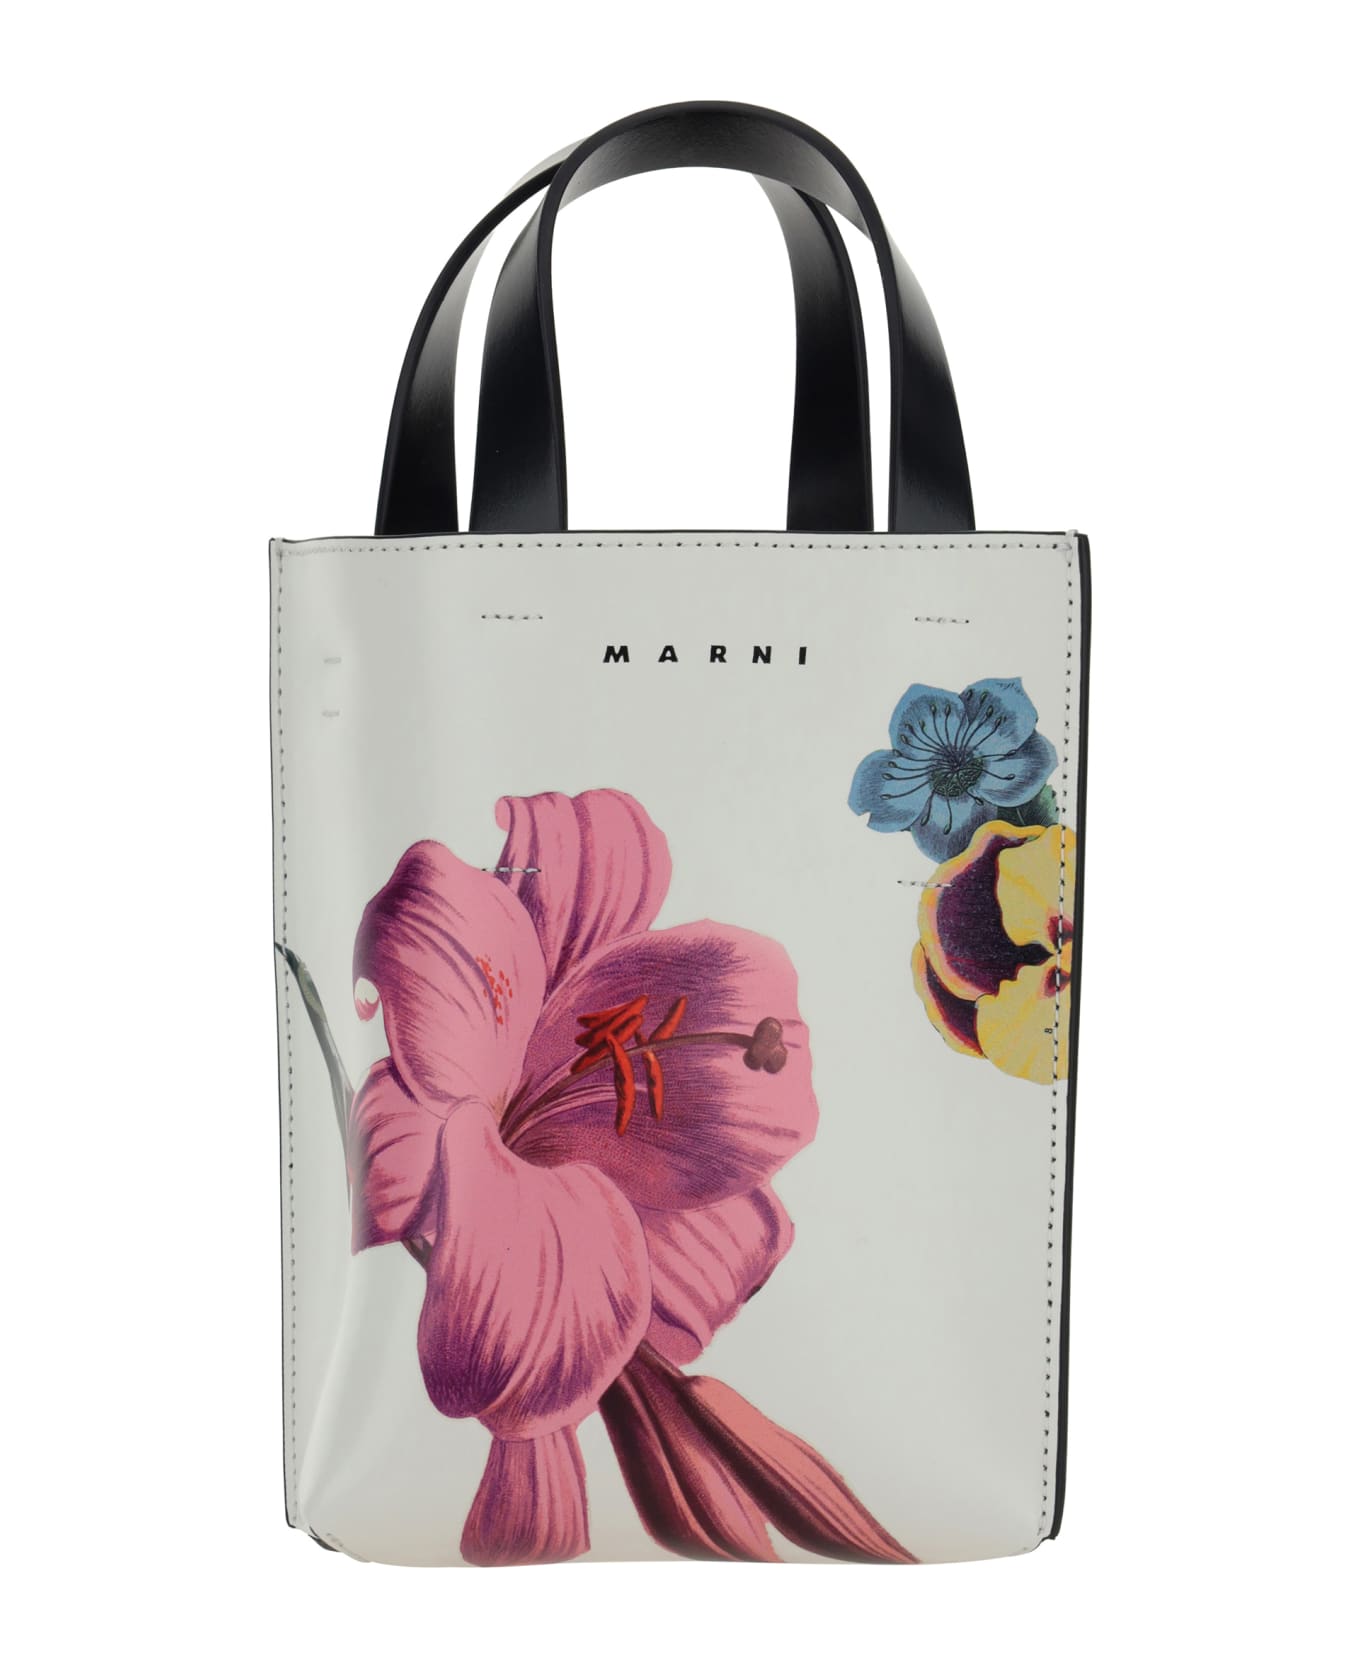 Marni Tote Handbag - Lily White/pink/black バッグ